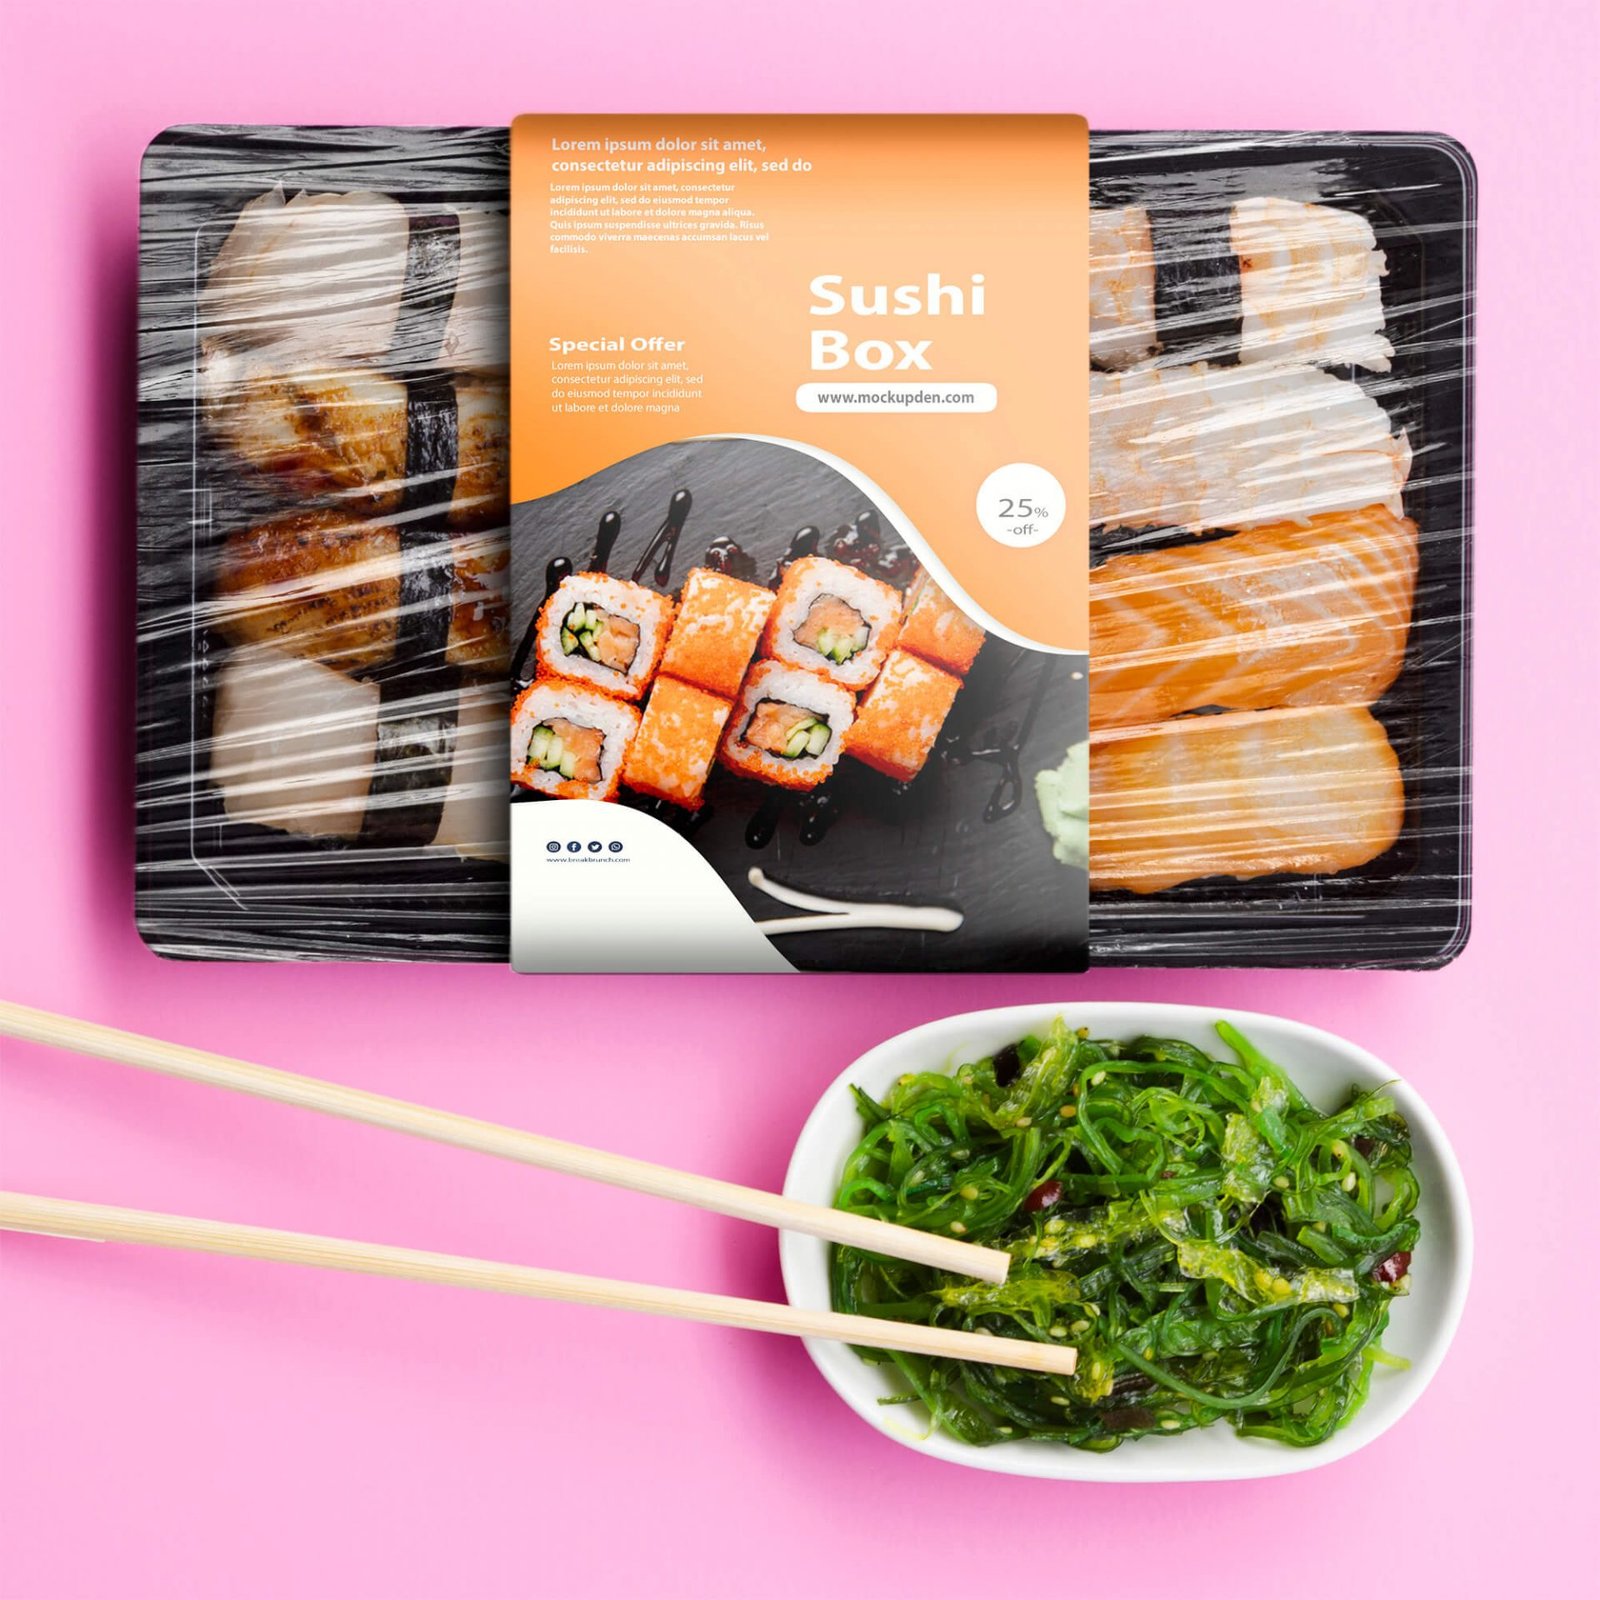 Download Free Sushi Box Packaging Mockup PSD Template - Mockup Den